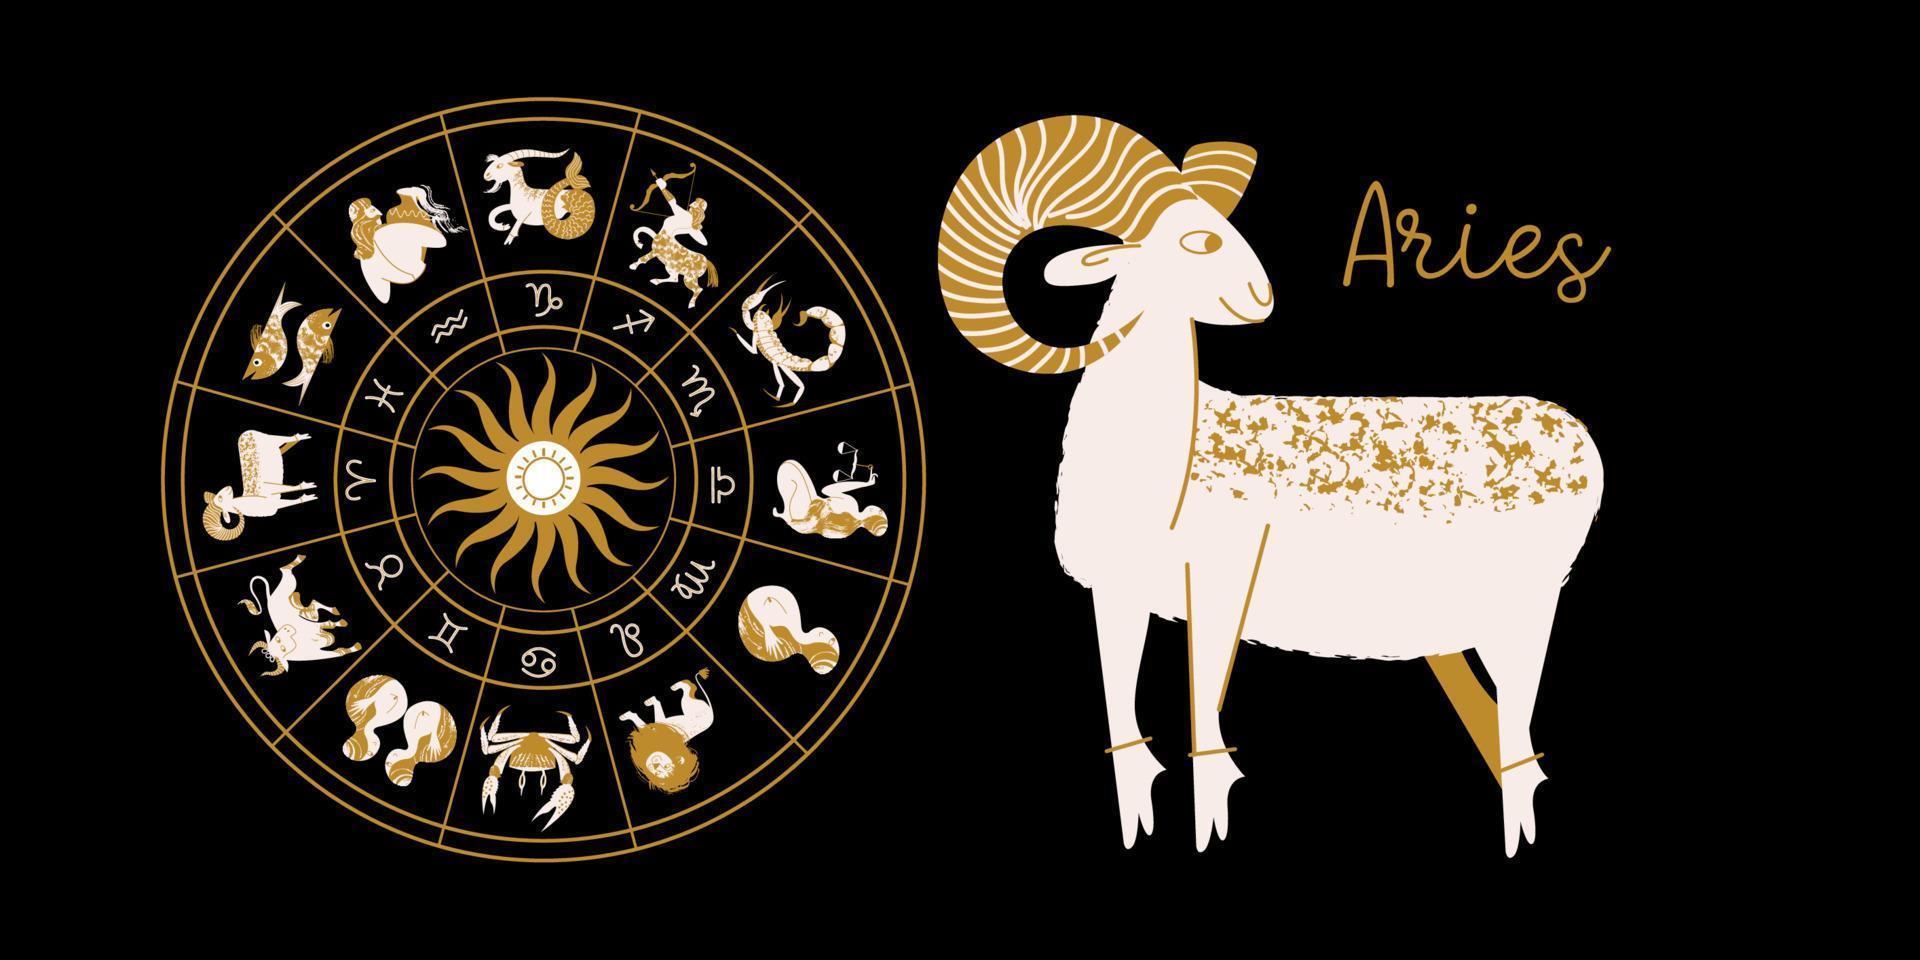 Touro do signo do Zodíaco. horóscopo e astrologia. horóscopo completo no círculo. zodíaco de roda de horóscopo com vetor de doze signos.